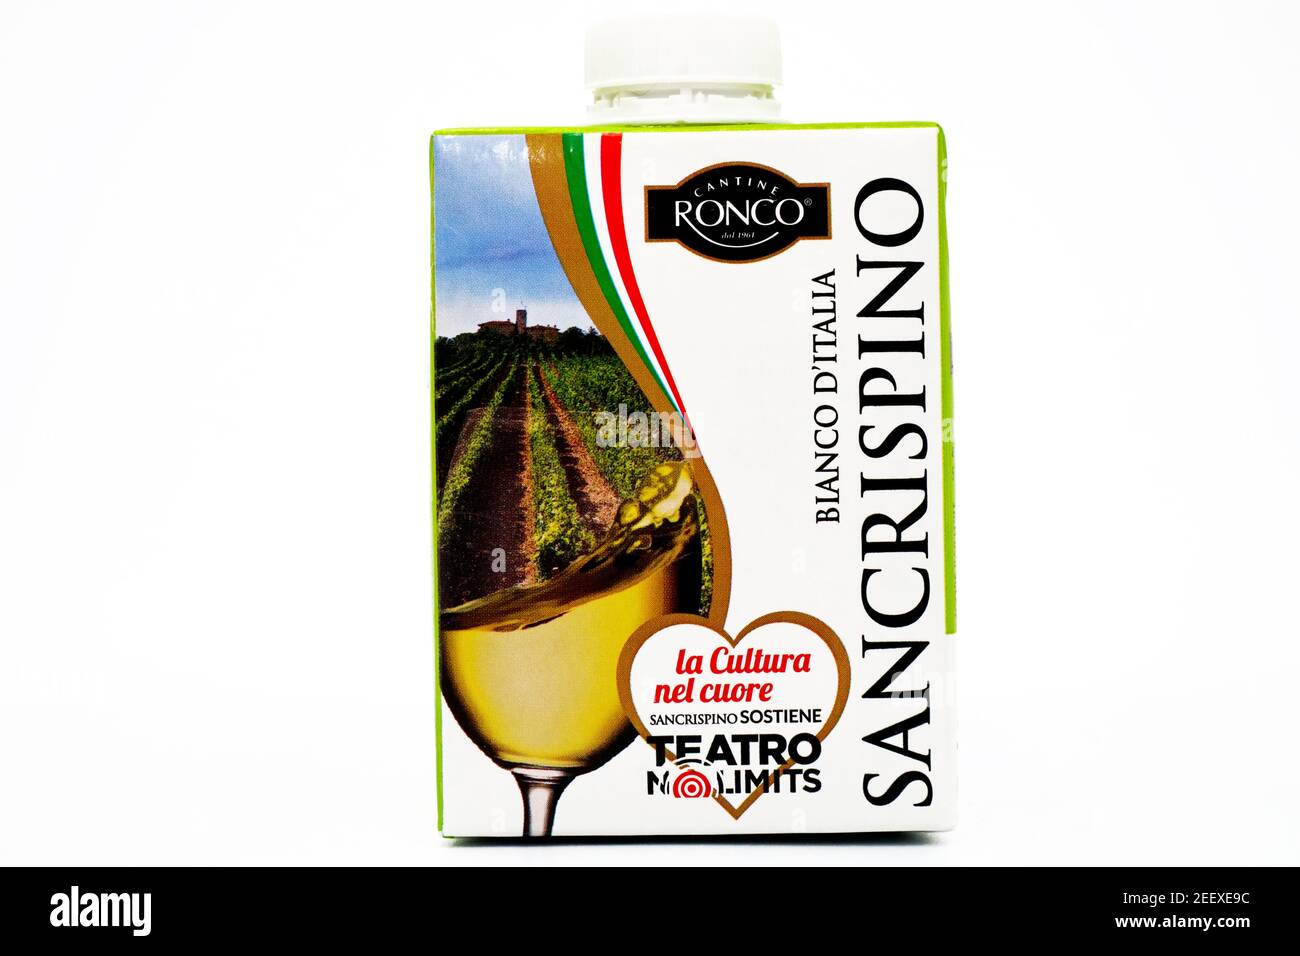 SANCRISPINO Cantine Ronco Italian White Wine Stock Photo - Alamy